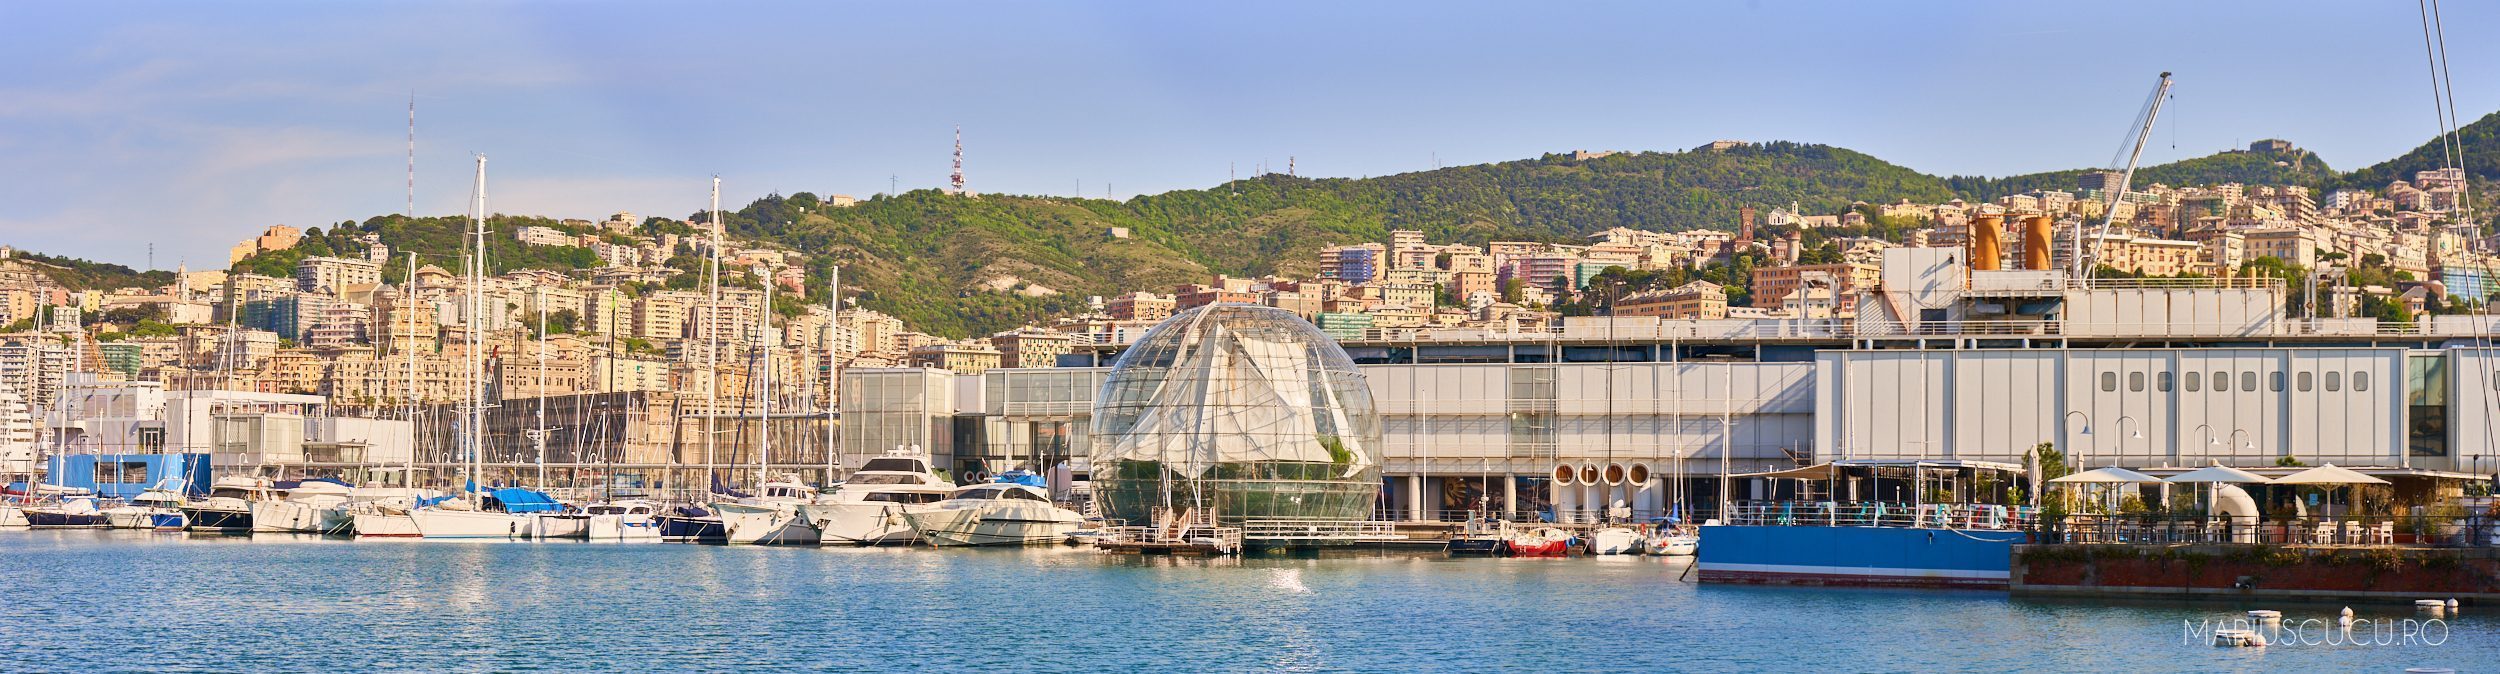 Genoa port landscape